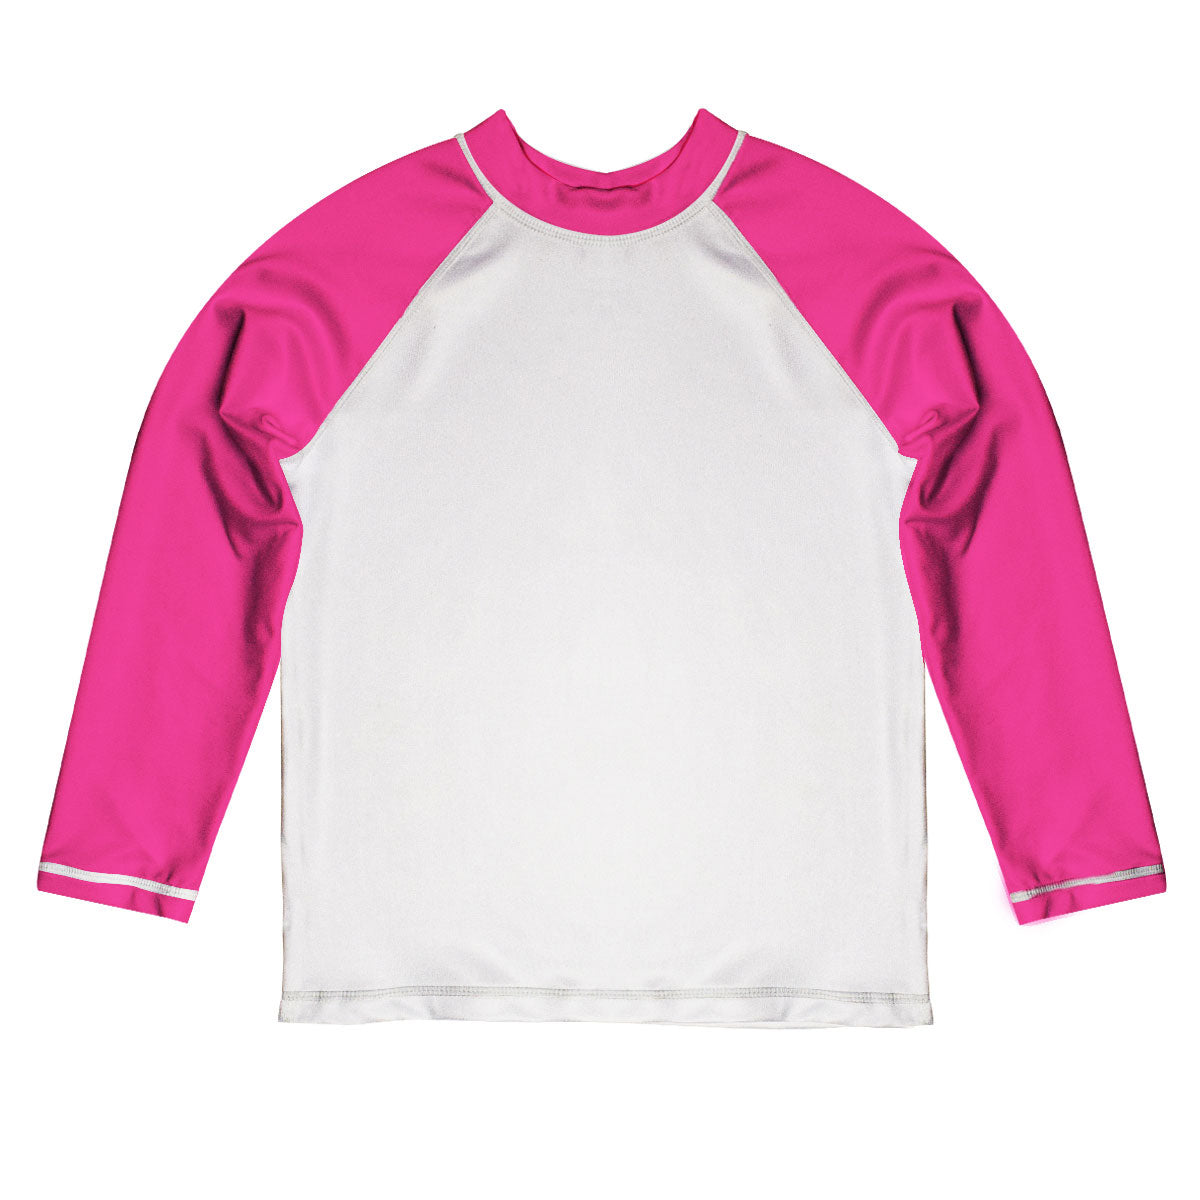 Monogram White and Hot Pink Long Sleeve Rash Guard - Wimziy&Co.